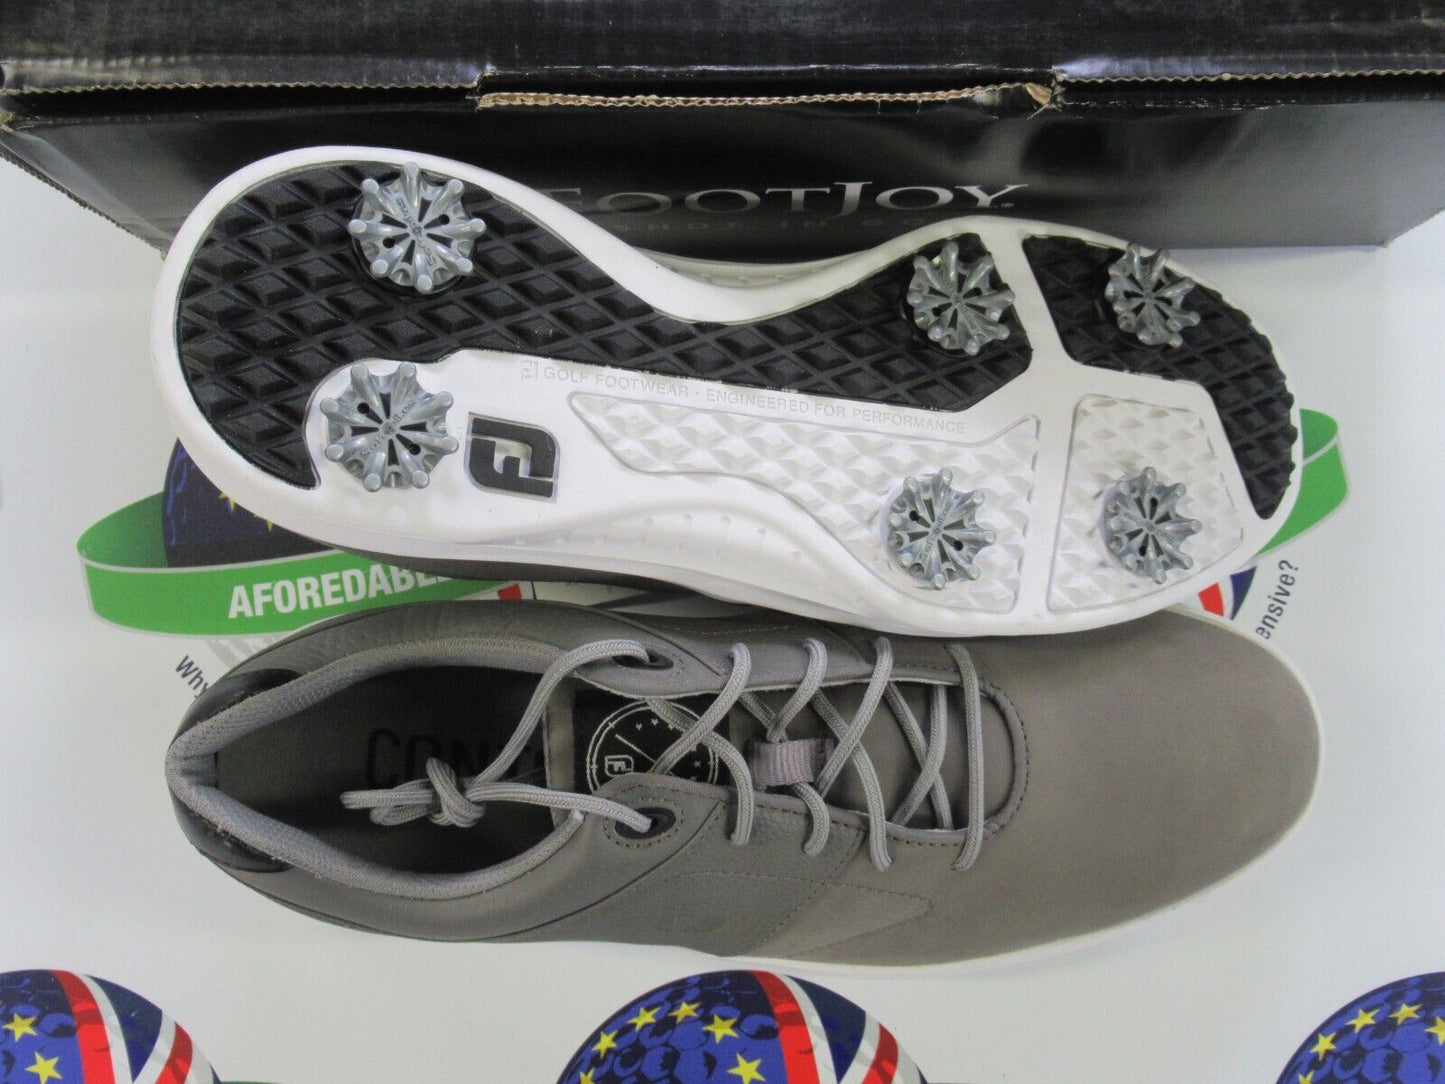 footjoy contour golf shoes 54129k grey uk size 8.5 medium